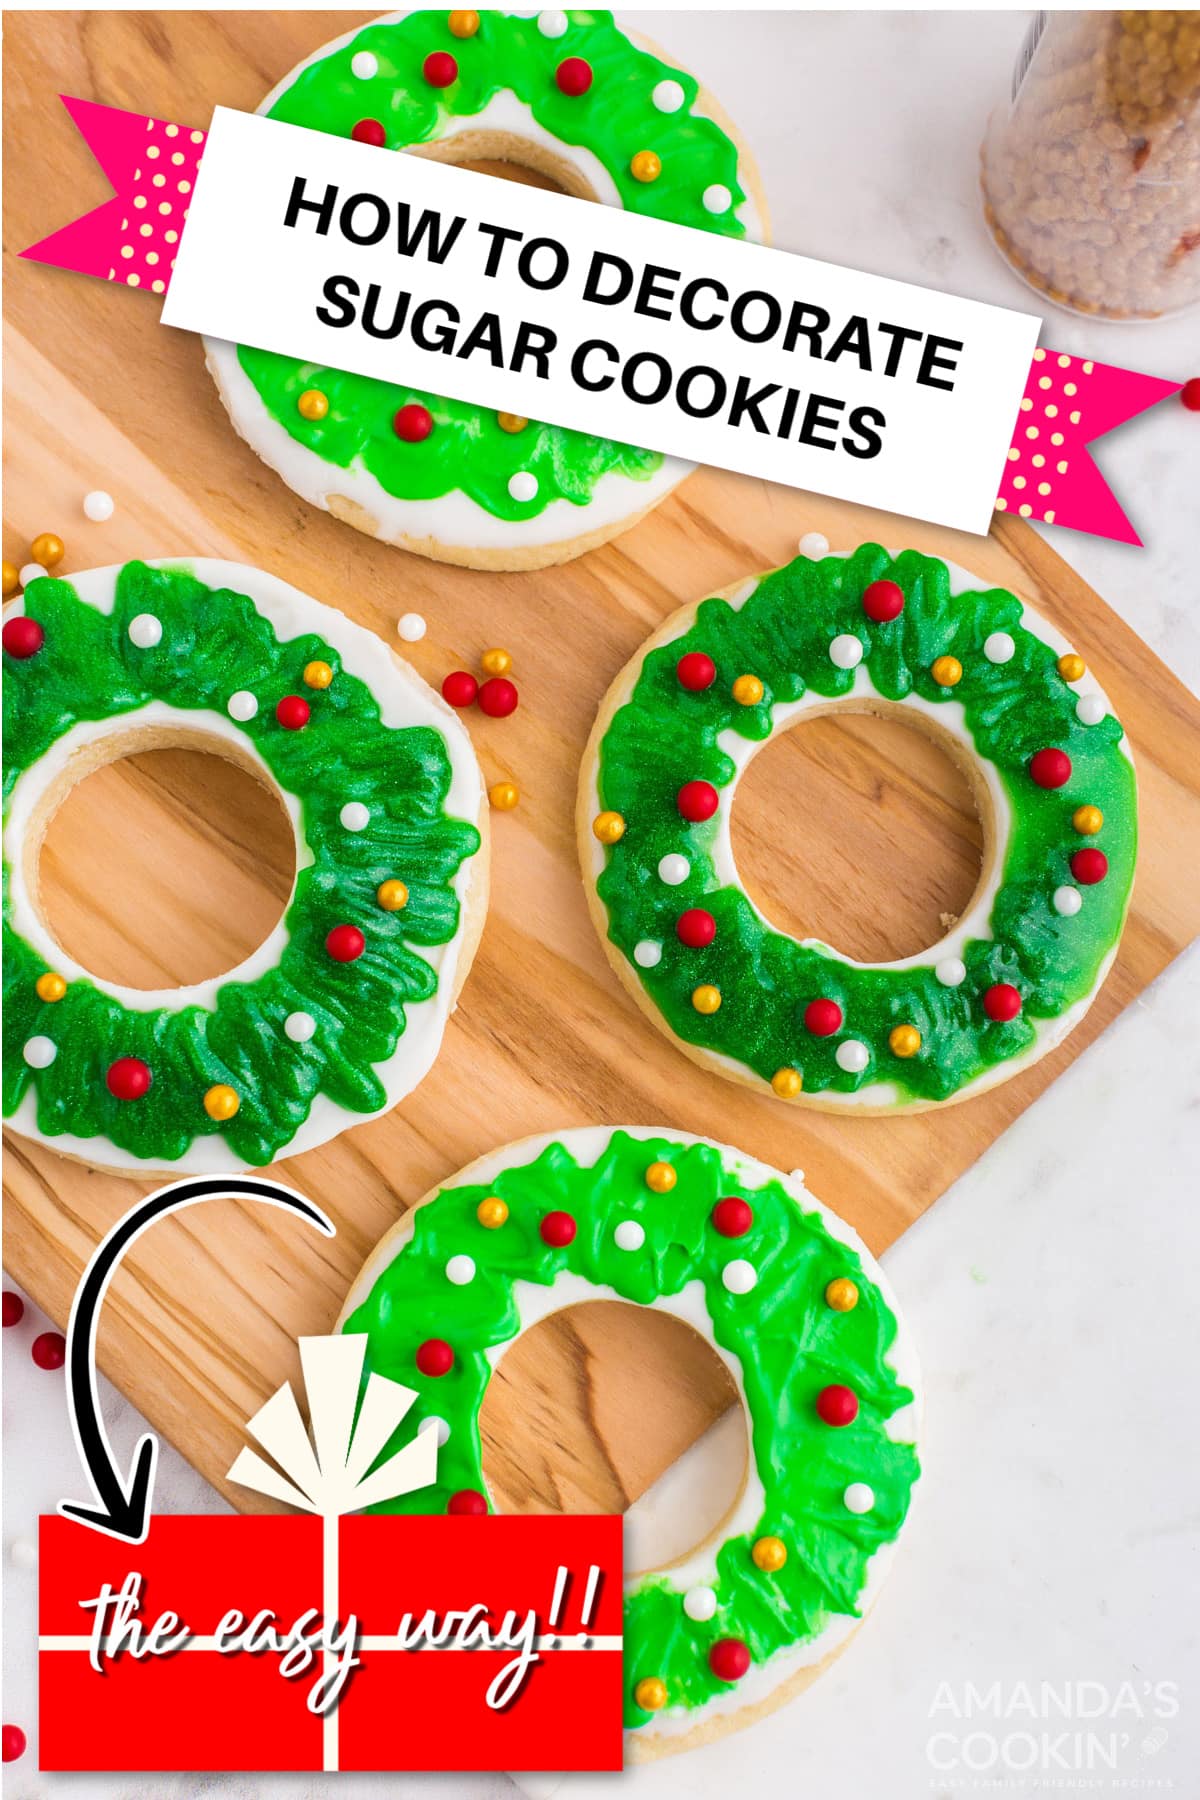 Easy Decorated Sugar Cookies - Amanda's Cookin' - Tips & Tricks